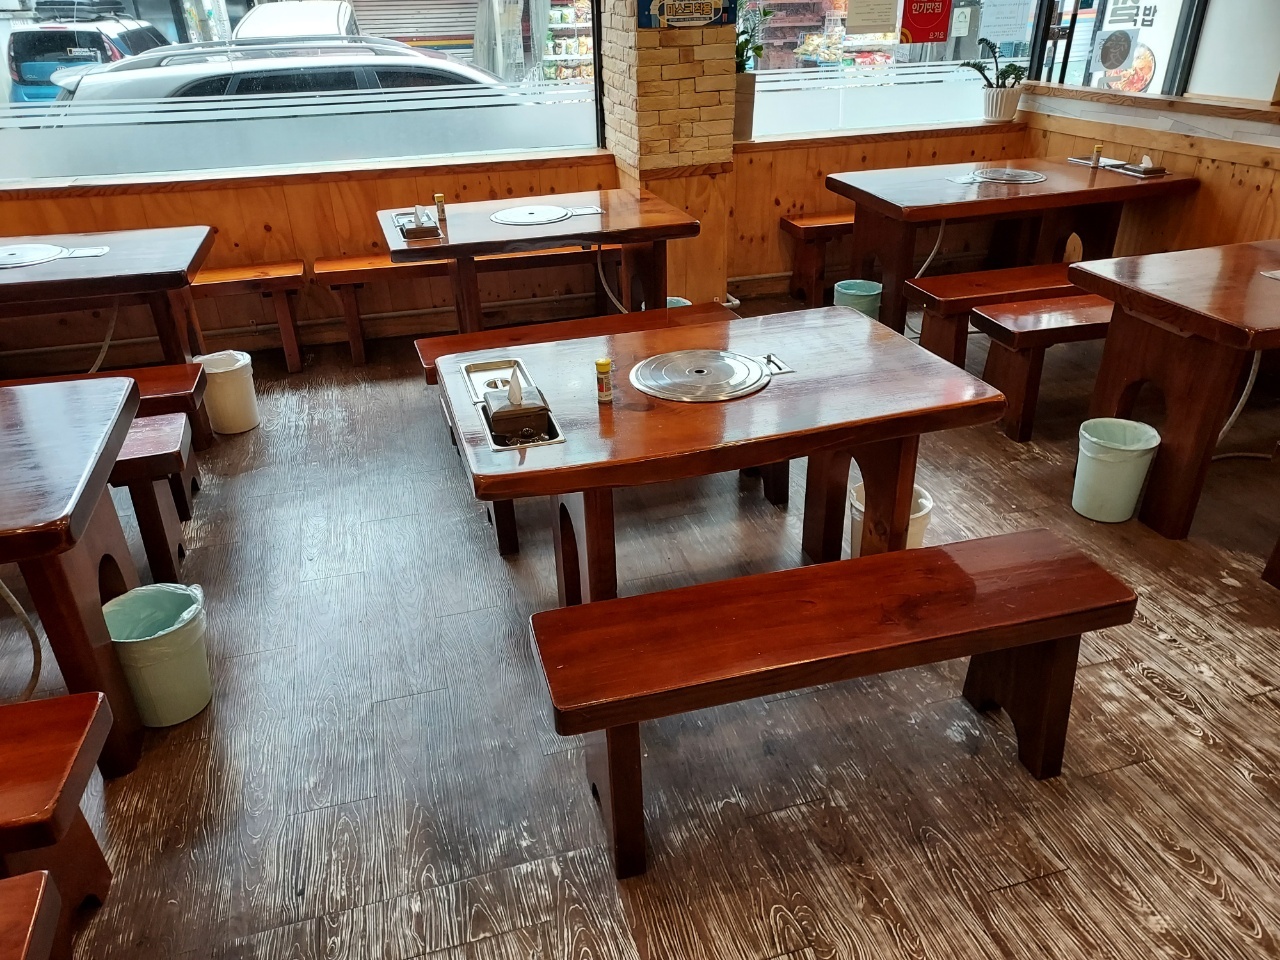 A restaurant in Gwanak-gu, southern Seoul, appears empty. (Lee Si-jin/The Korea Herald)